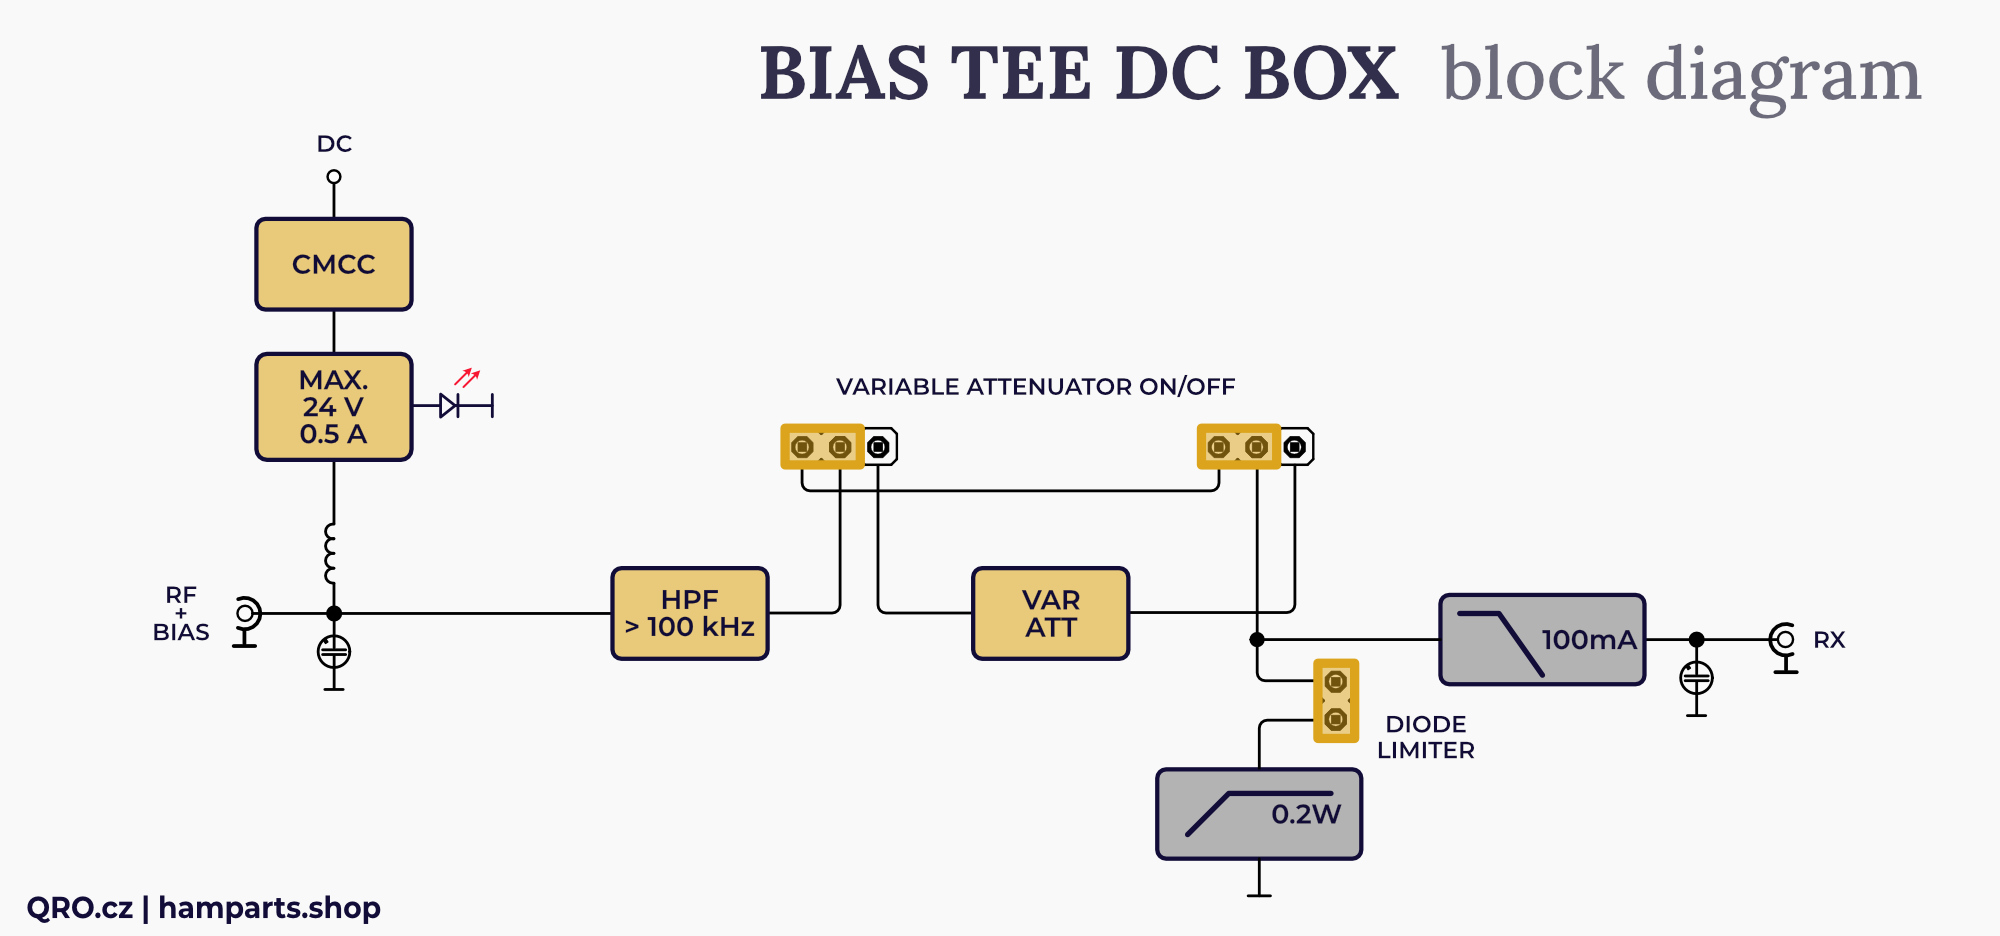 bias tee box dc block diagram qro.cz hamparts.shop